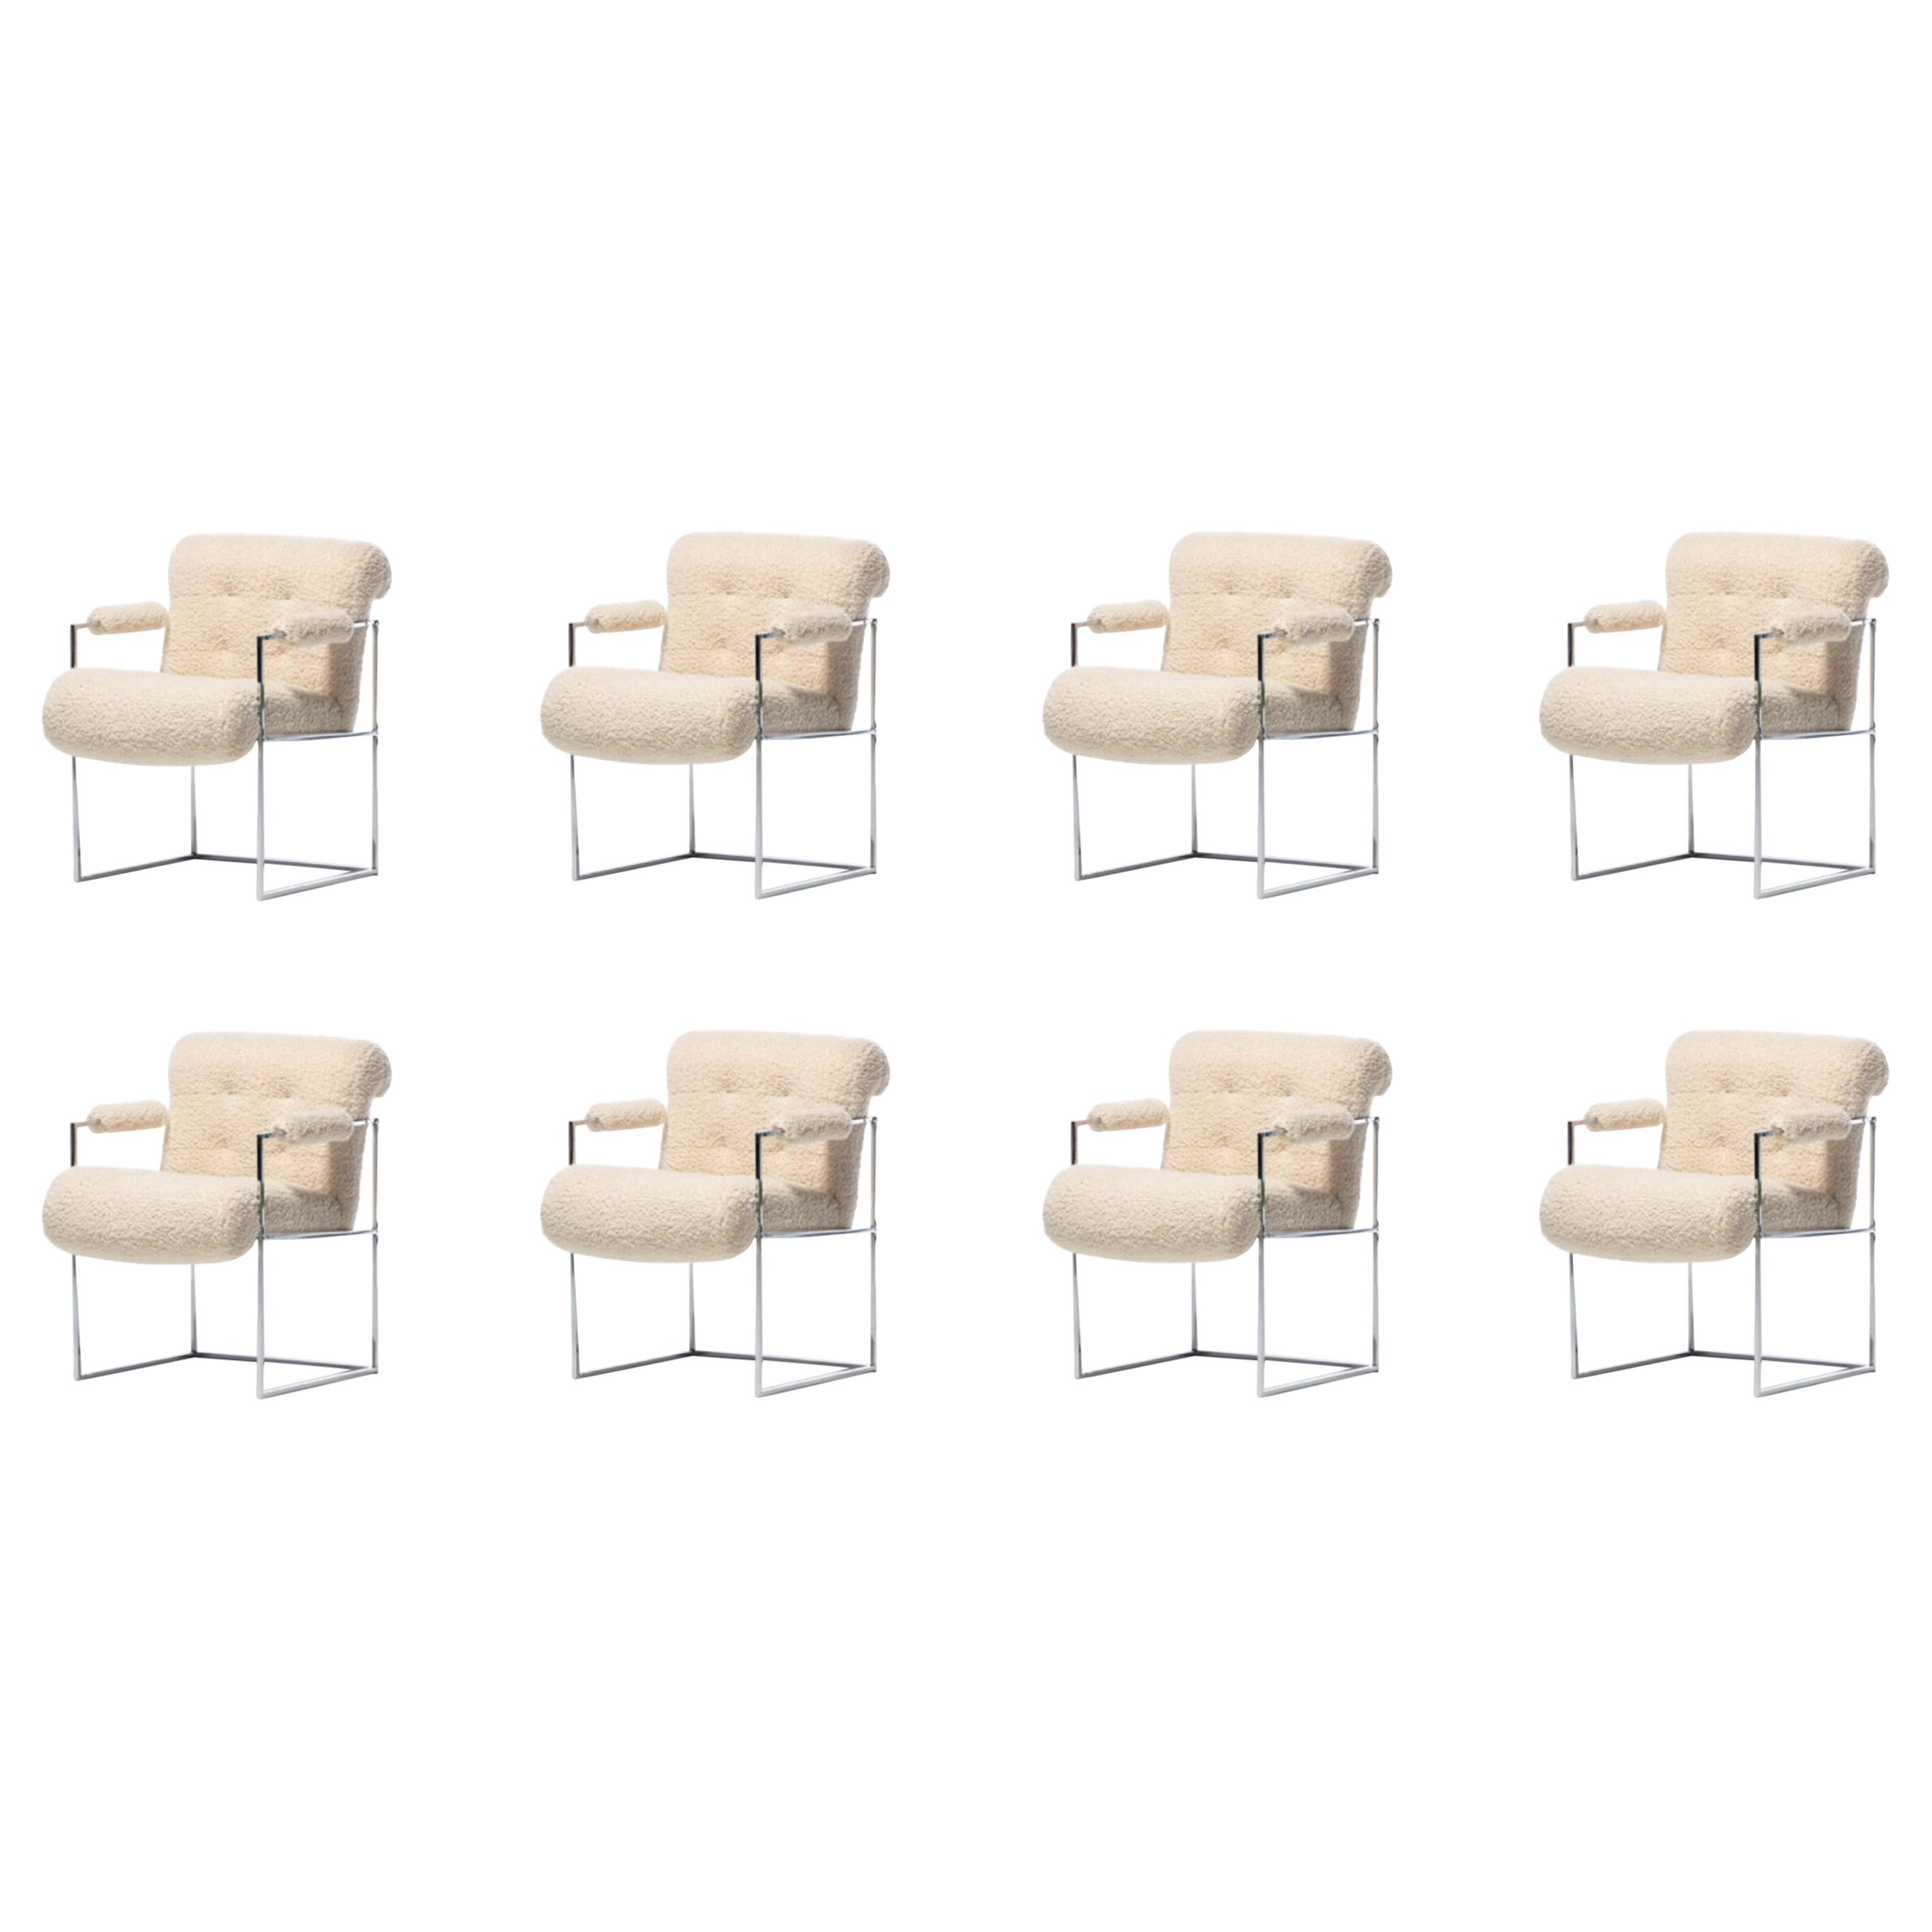 Milo Baughman: 8er-Set verchromte Esszimmerstühle aus elfenbeinfarbenem Bouclé, um 1975